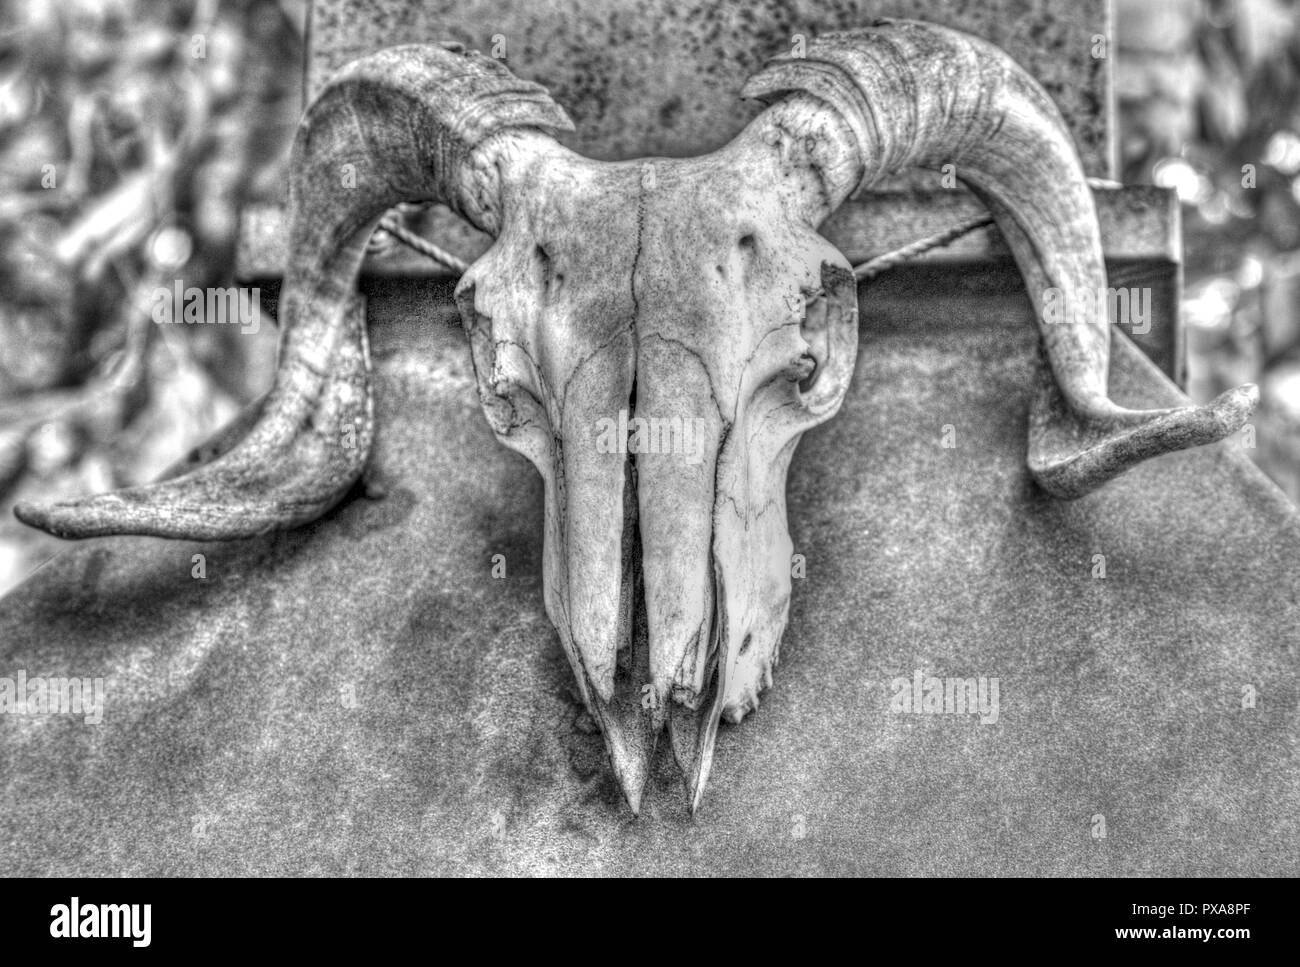 Ram skull in black and white closeup Stock Photo